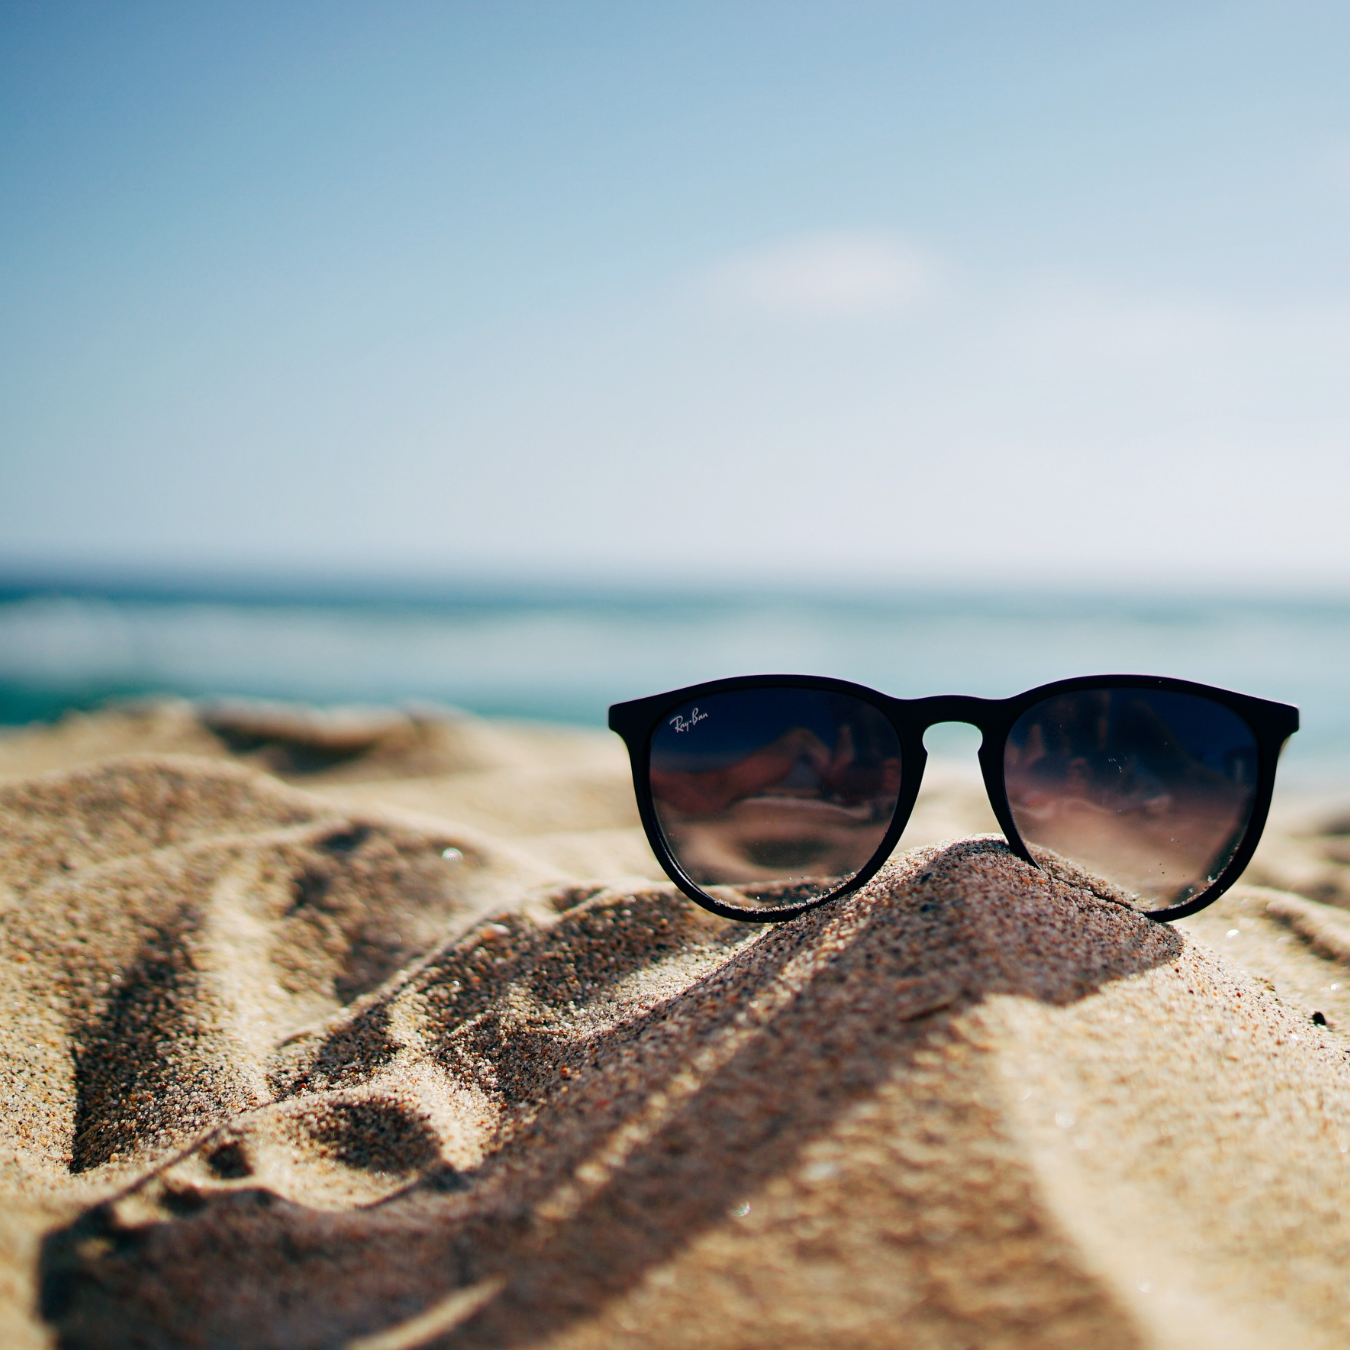 Sunglasses on sand at beach